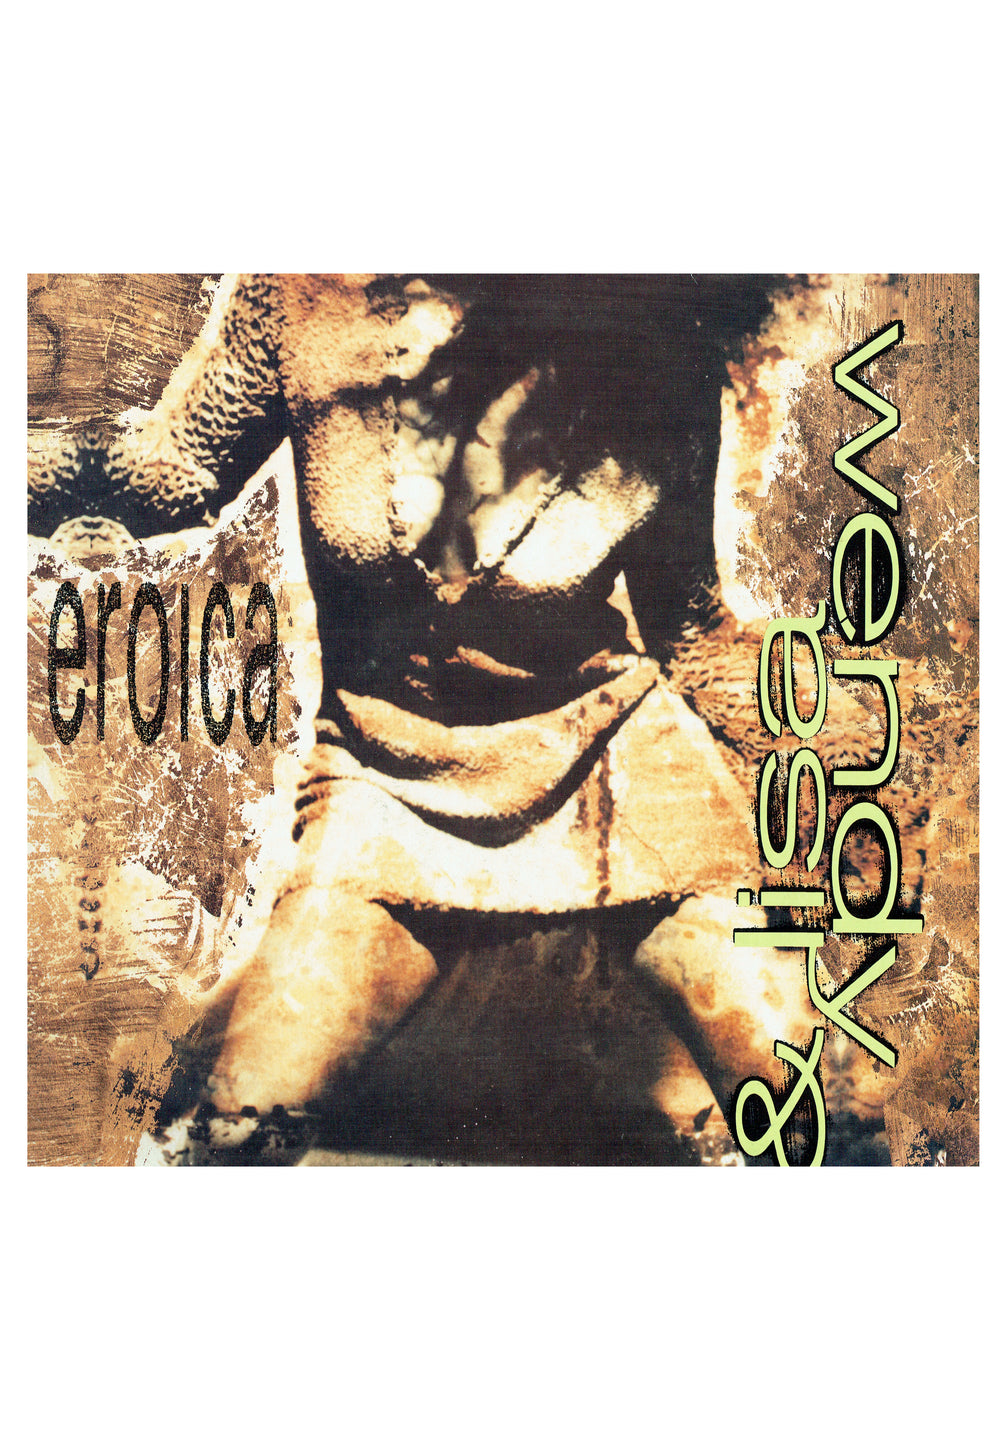 Wendy & Lisa Eroica Vinyl Album UK 1990 Original V2633 Prince